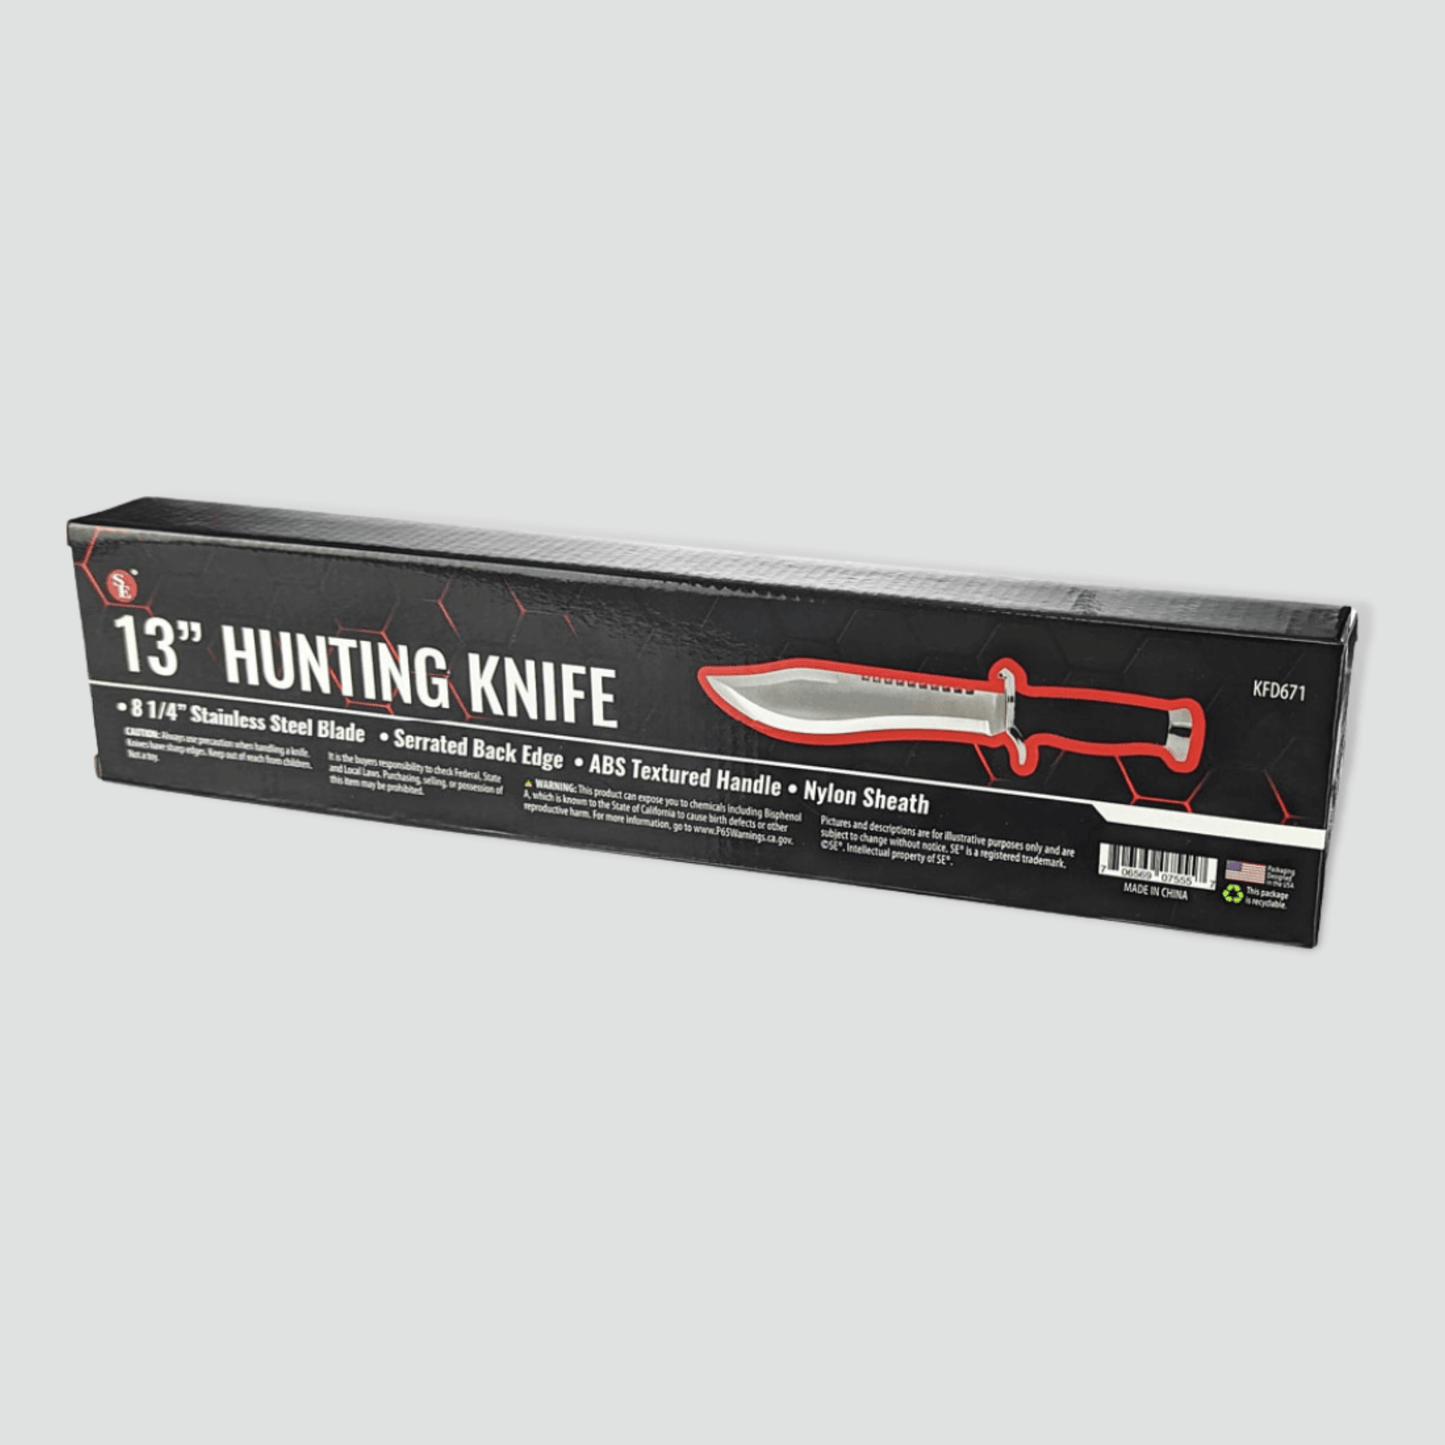 13" Hunting Knife